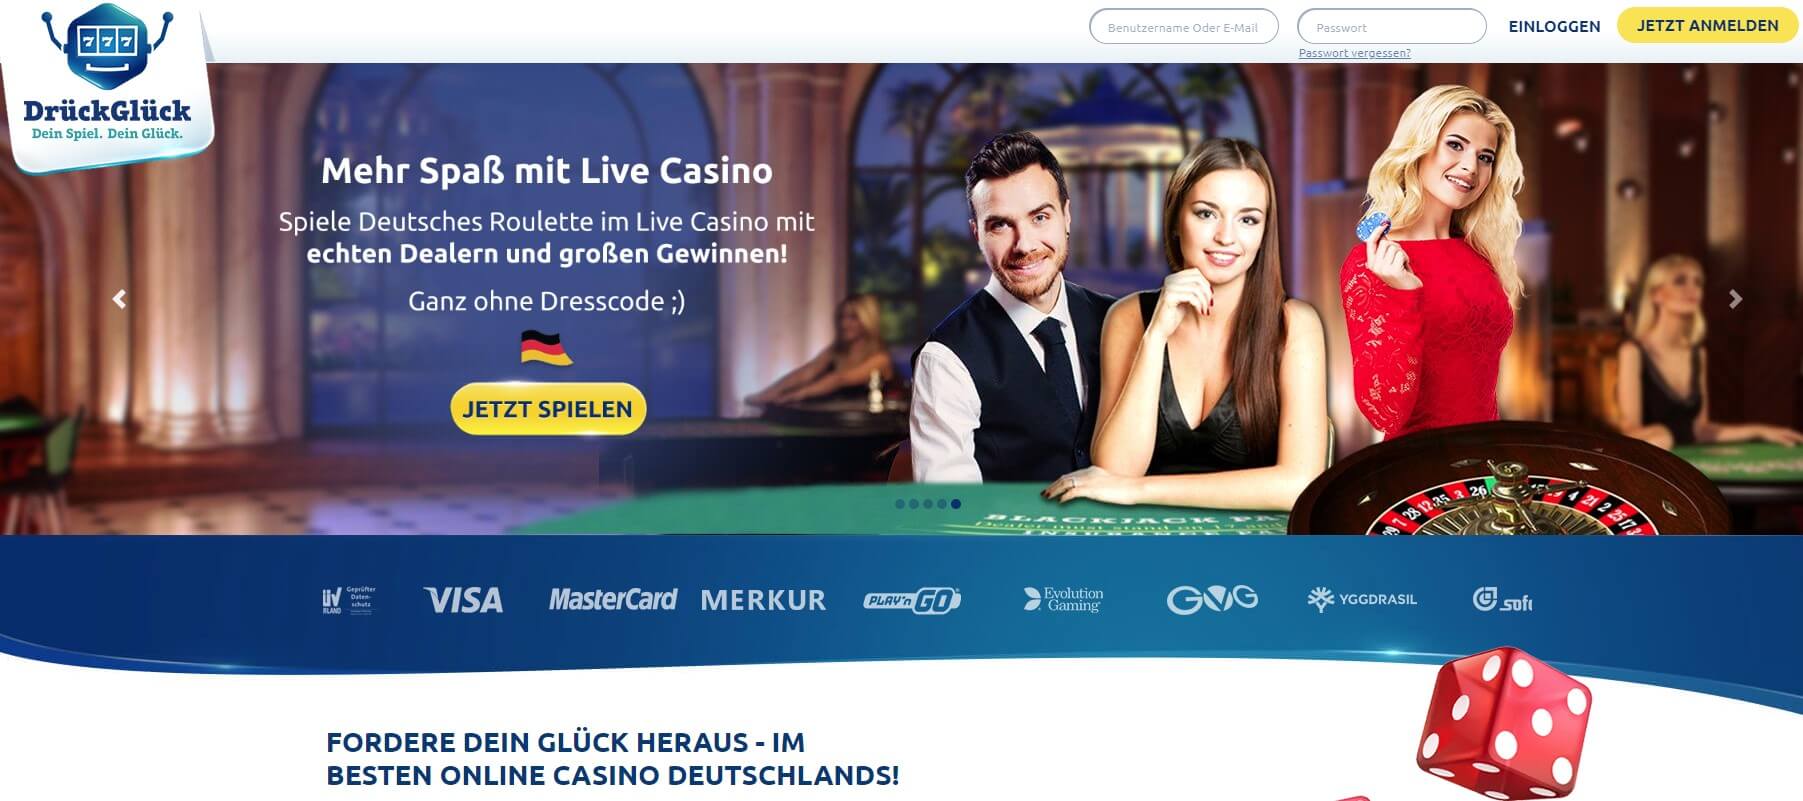 DruckGluck Casino